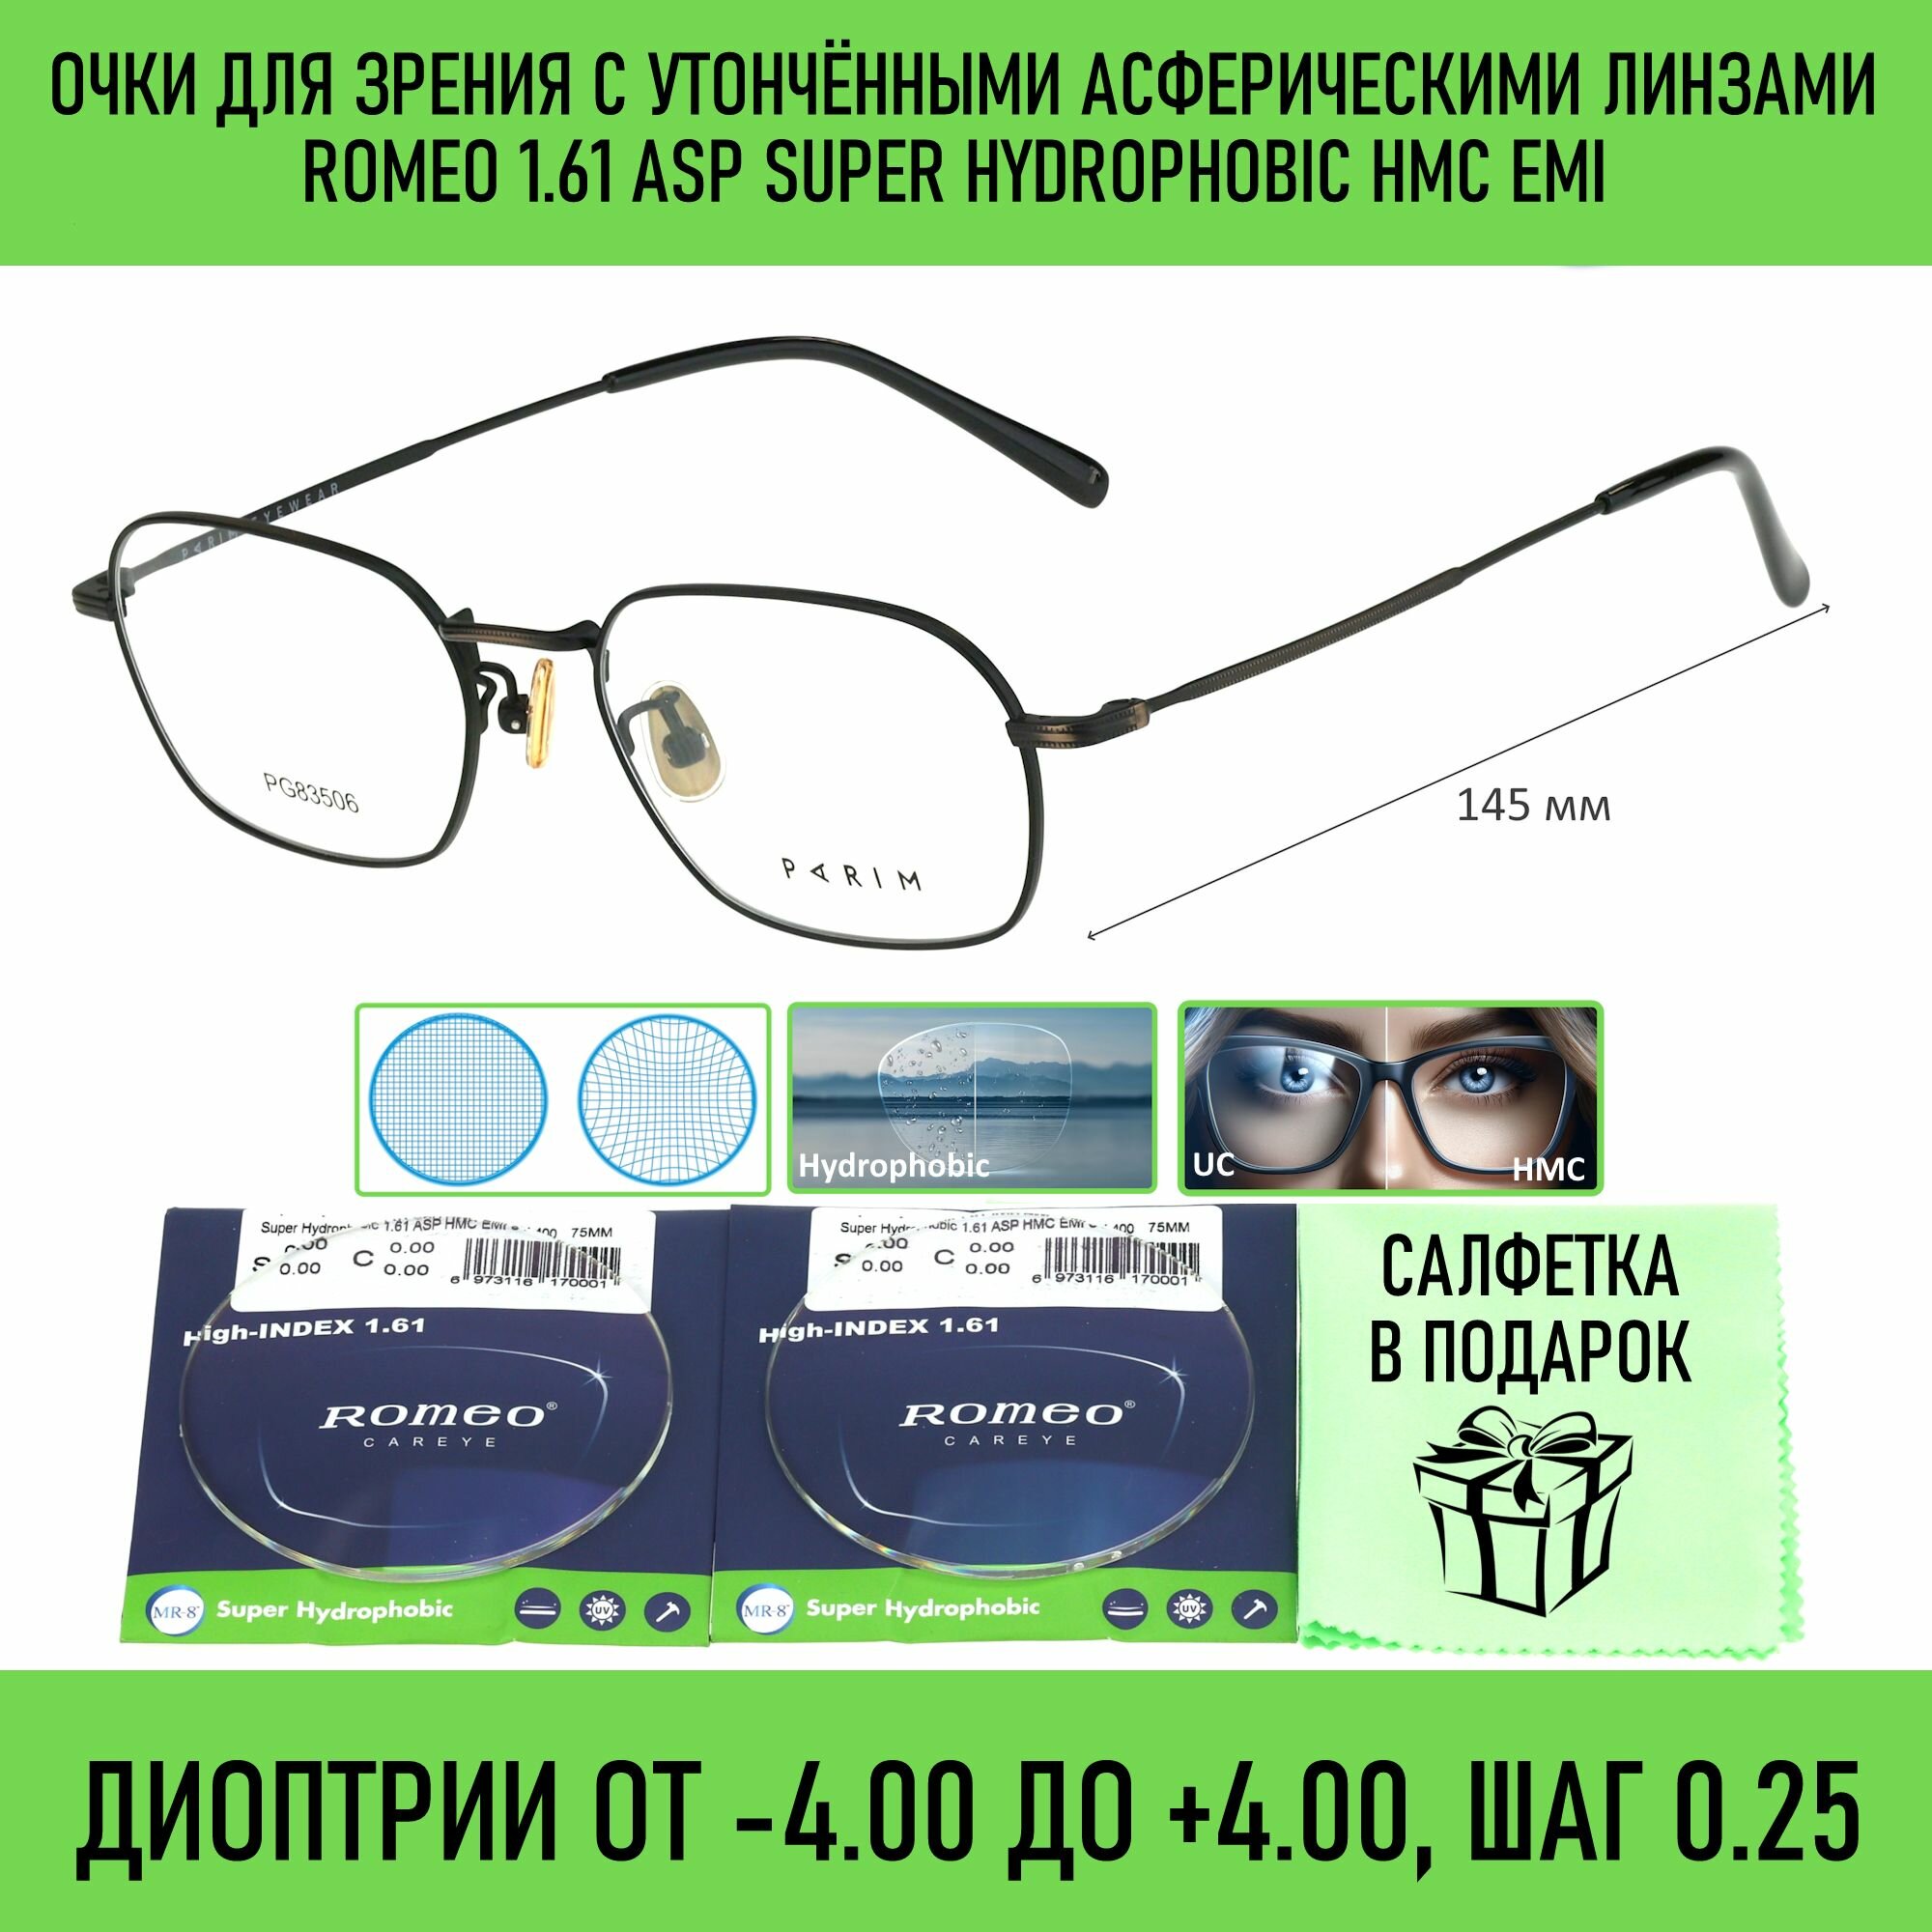 Очки для зрения PARIM мод. 83506 Цвет T1 с асферическими линзами ROMEO 1.61 ASP Super Hydrophobic HMC/EMI -3.50 РЦ 62-64